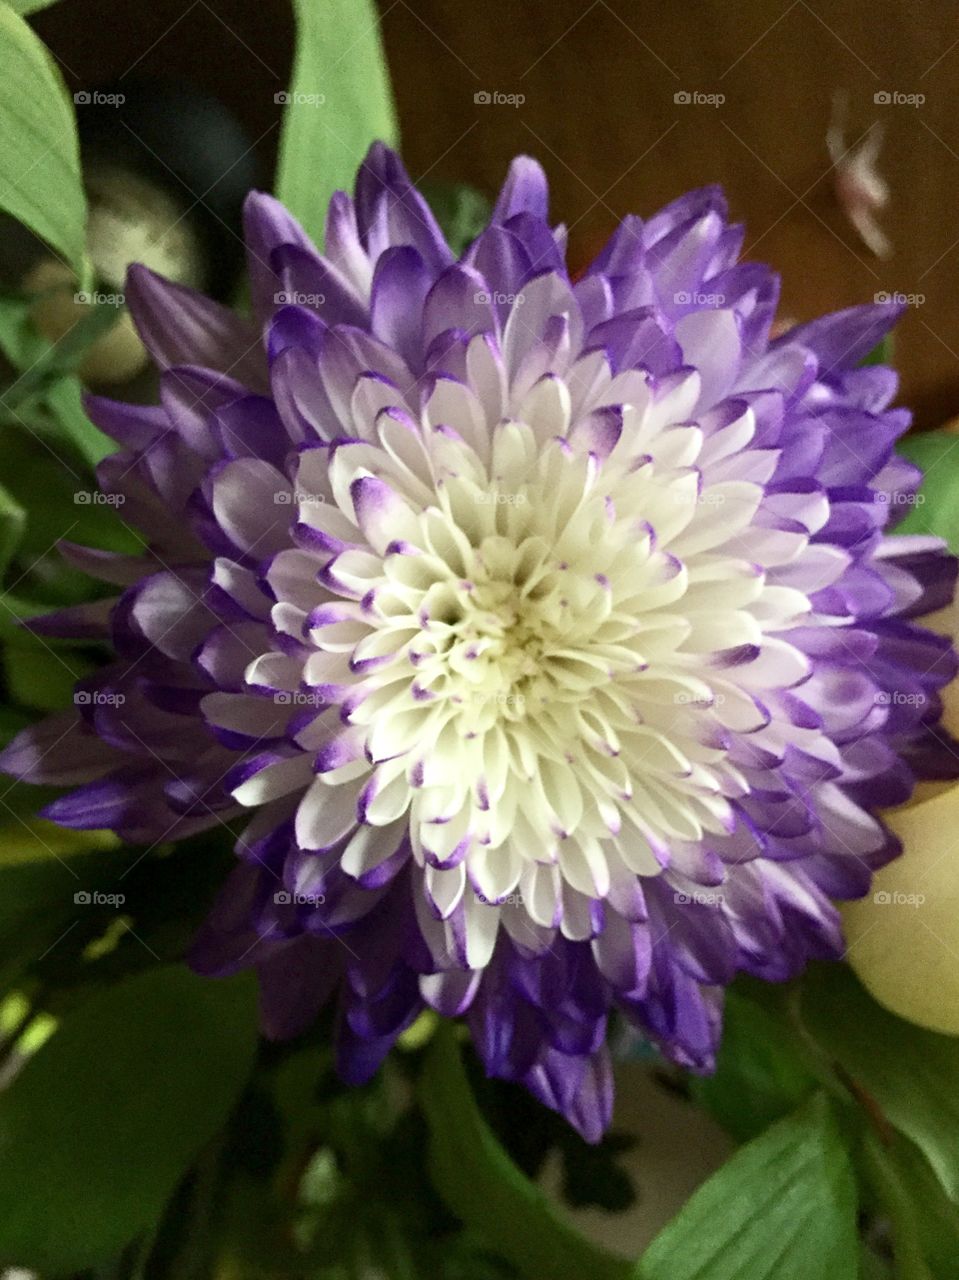 Pretty flower 